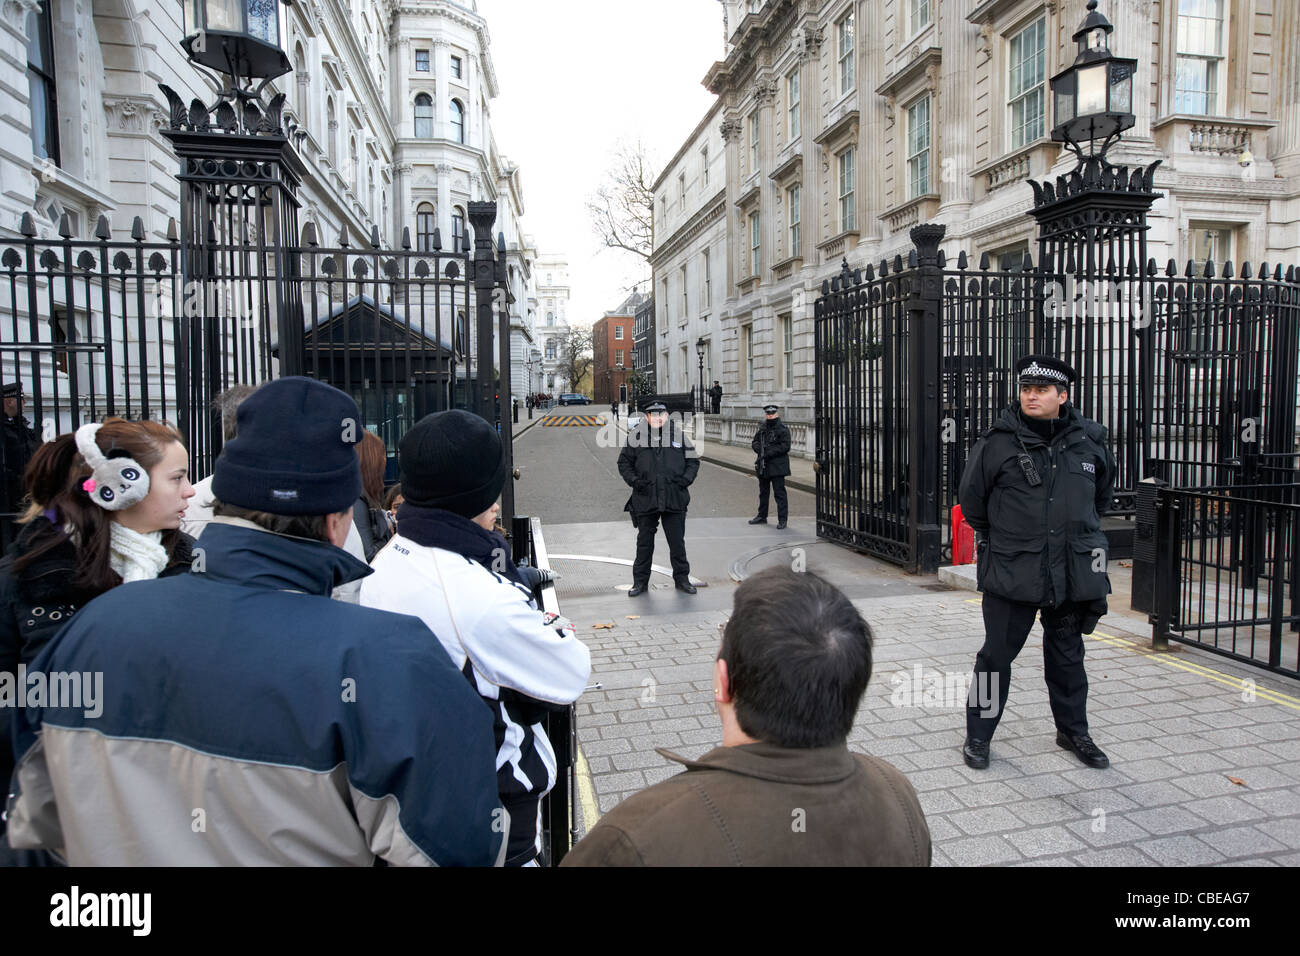 police protection and opened security gates outside downing street on whitehall london england united kingdom uk Stock Photo